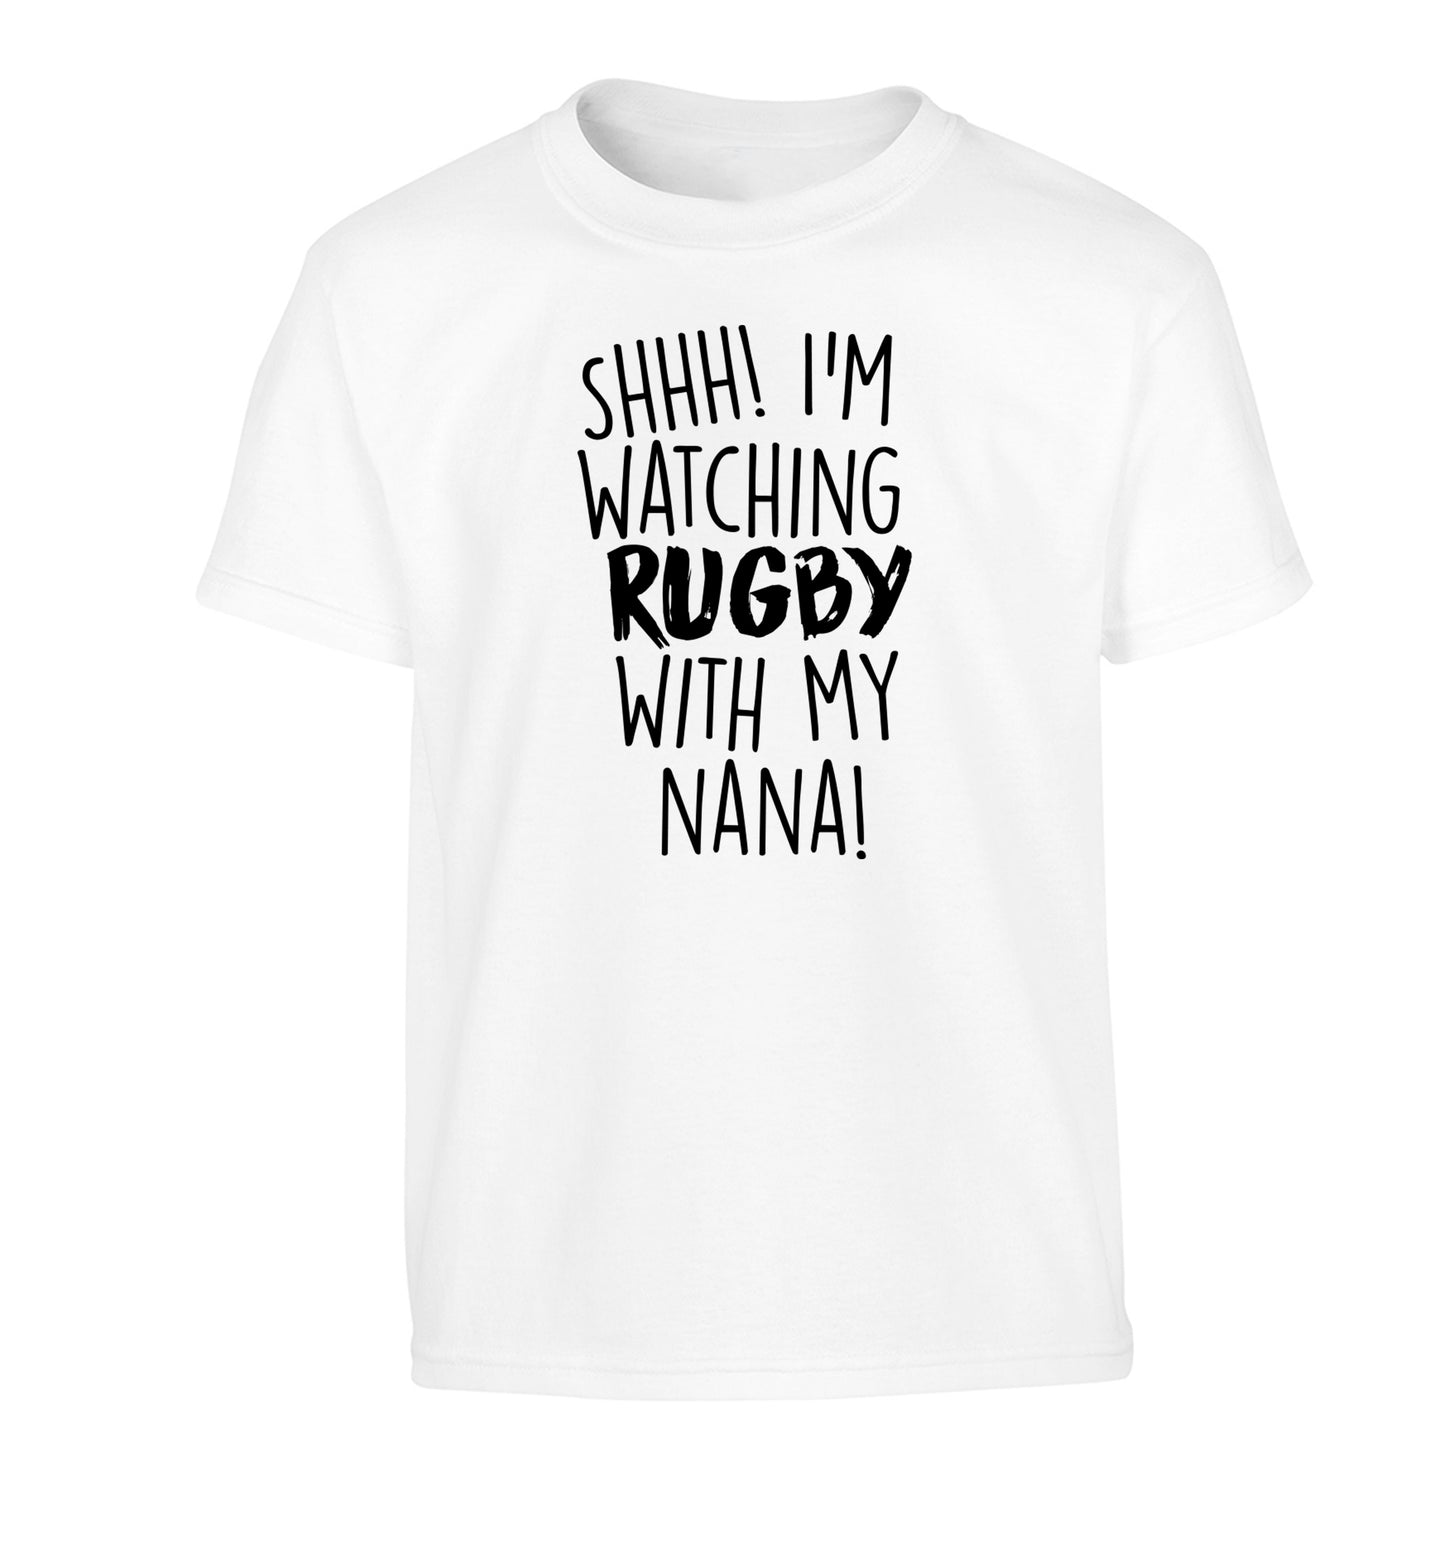 Shh I'm watching rugby with my nana Children's white Tshirt 12-13 Years